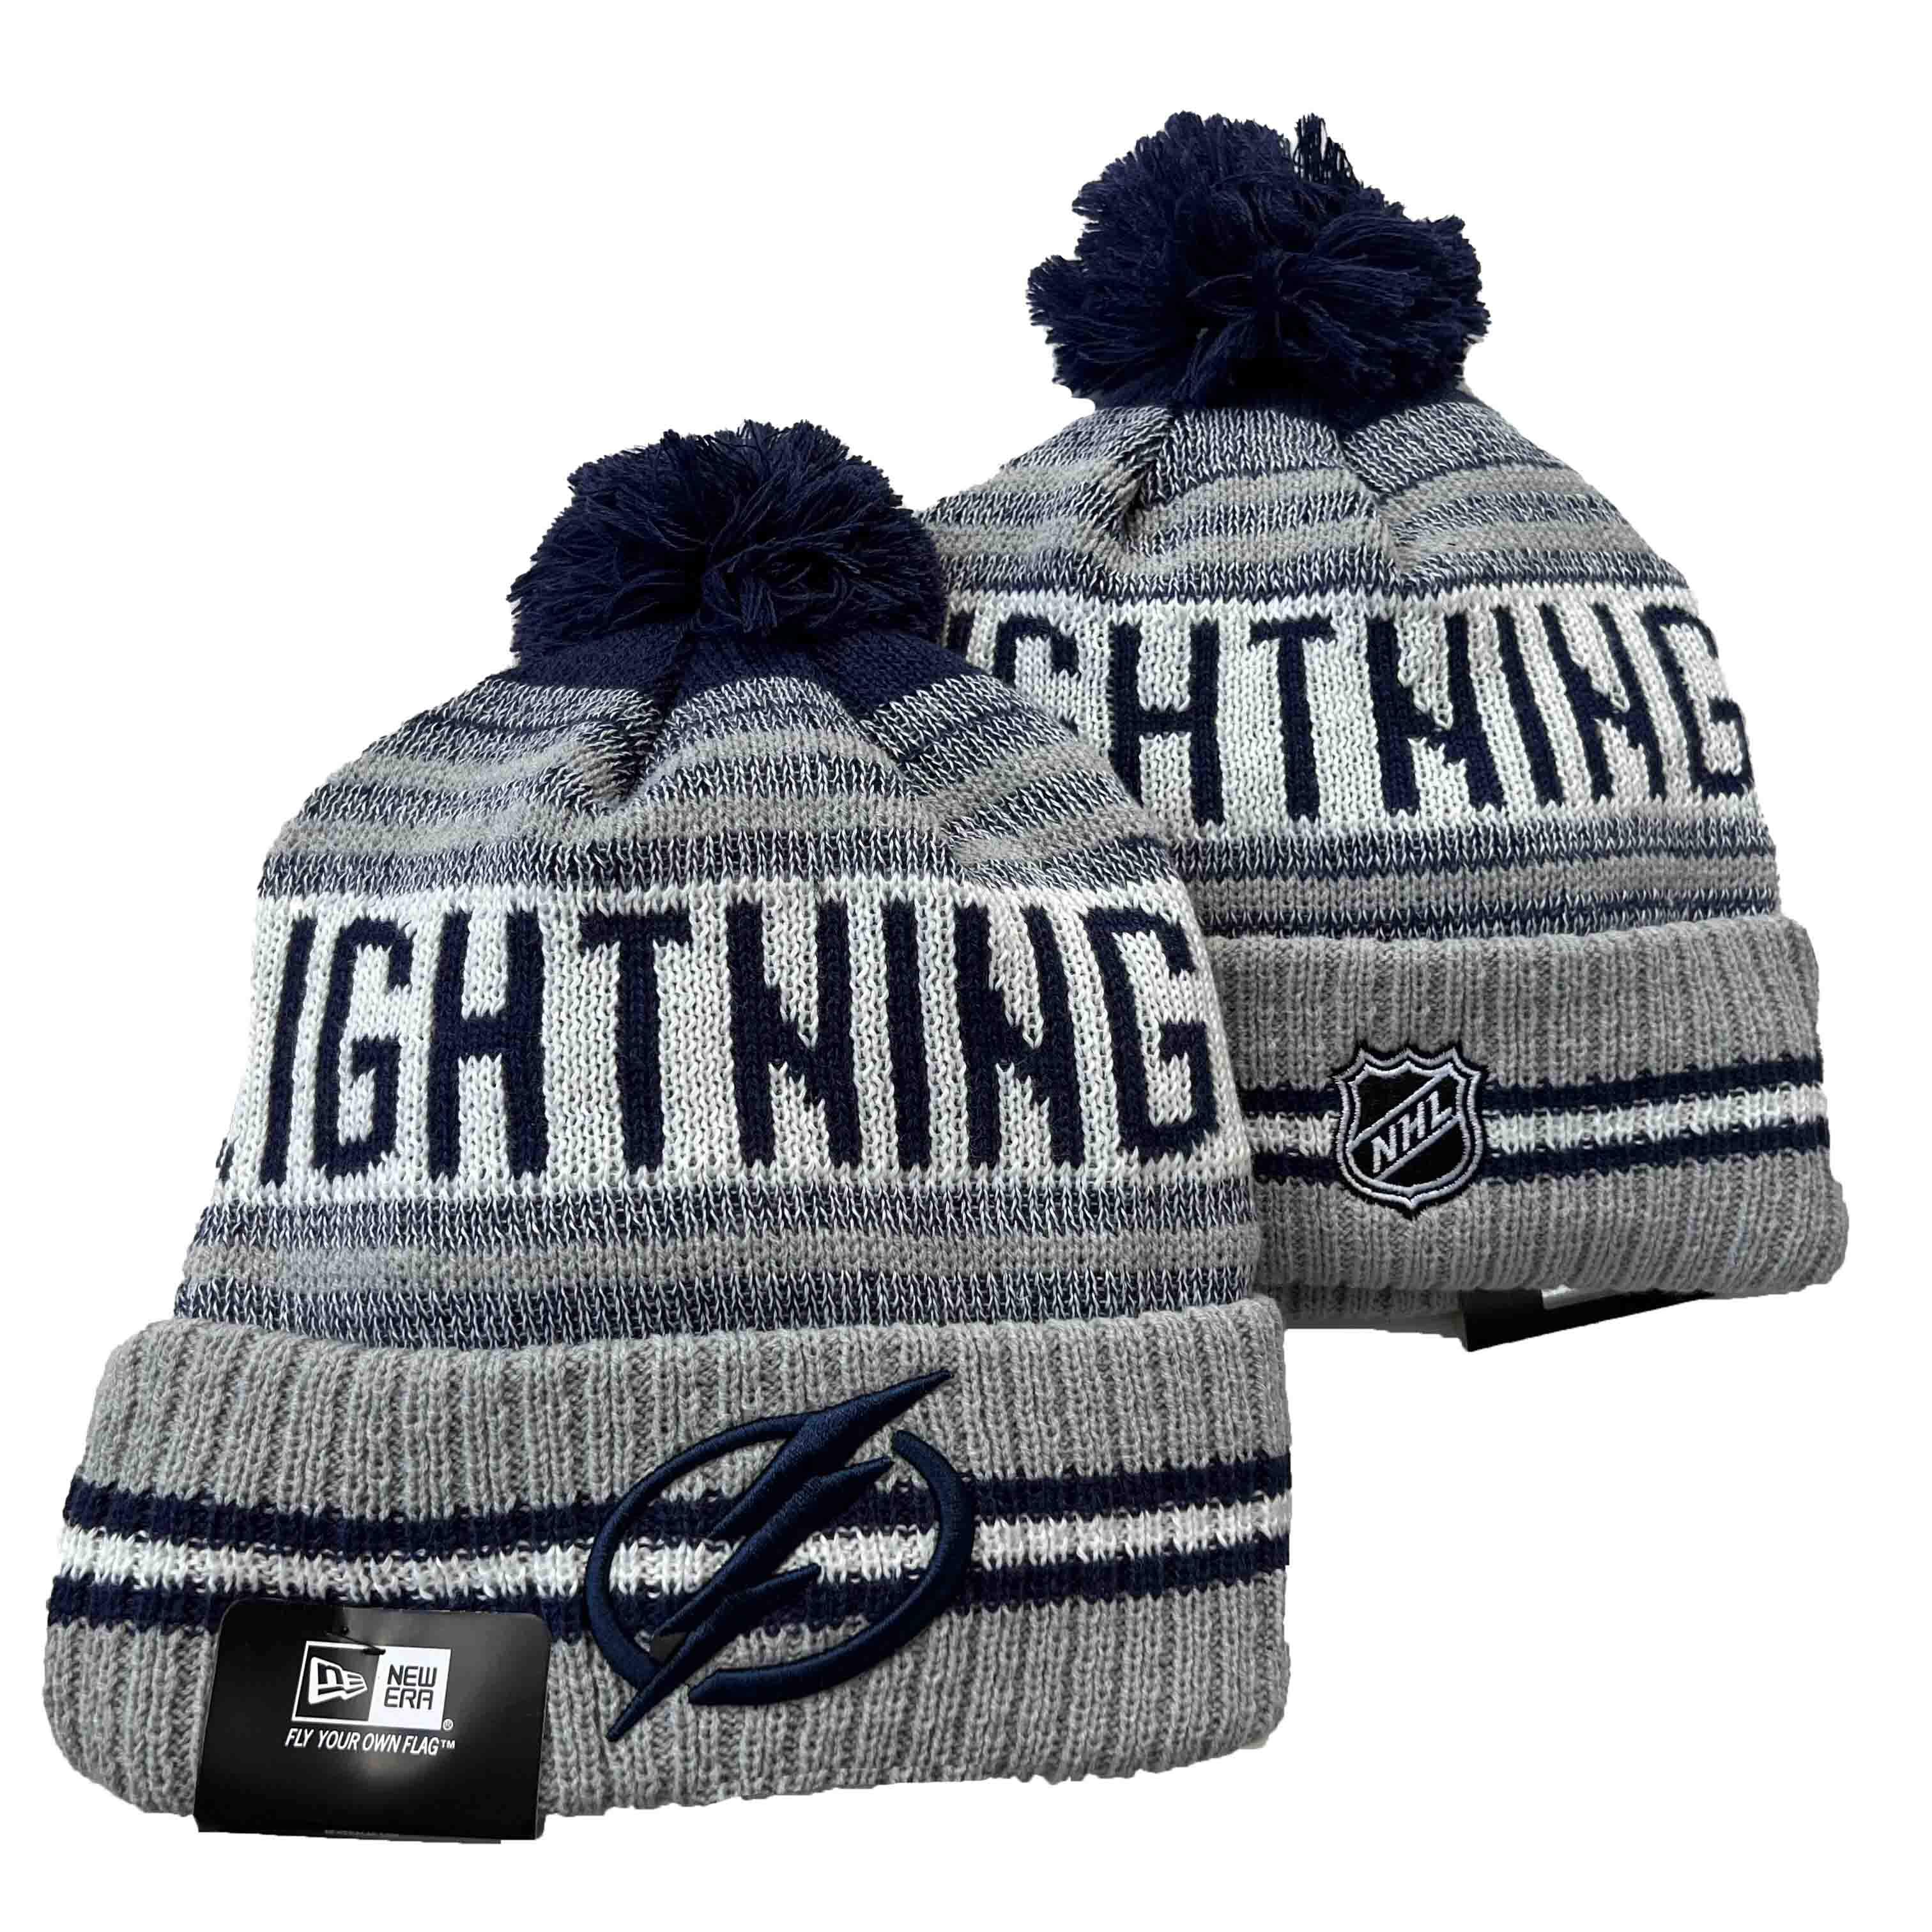 Tampa Bay Lightning Knit Hats -2